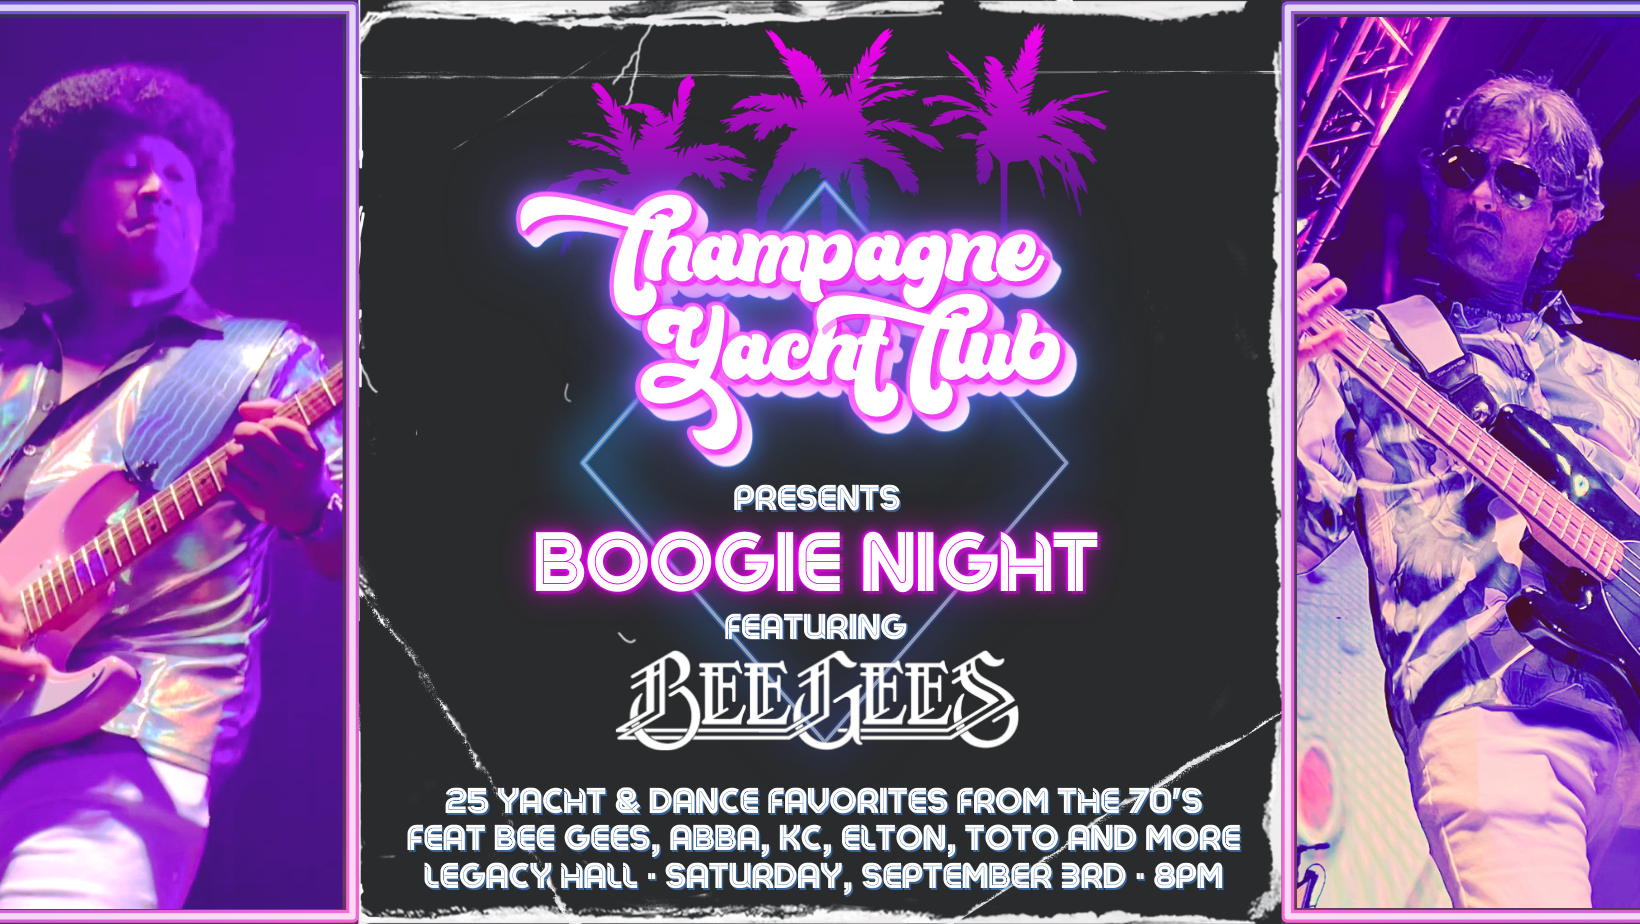 Champagne Yacht Club Boogie Night - hero